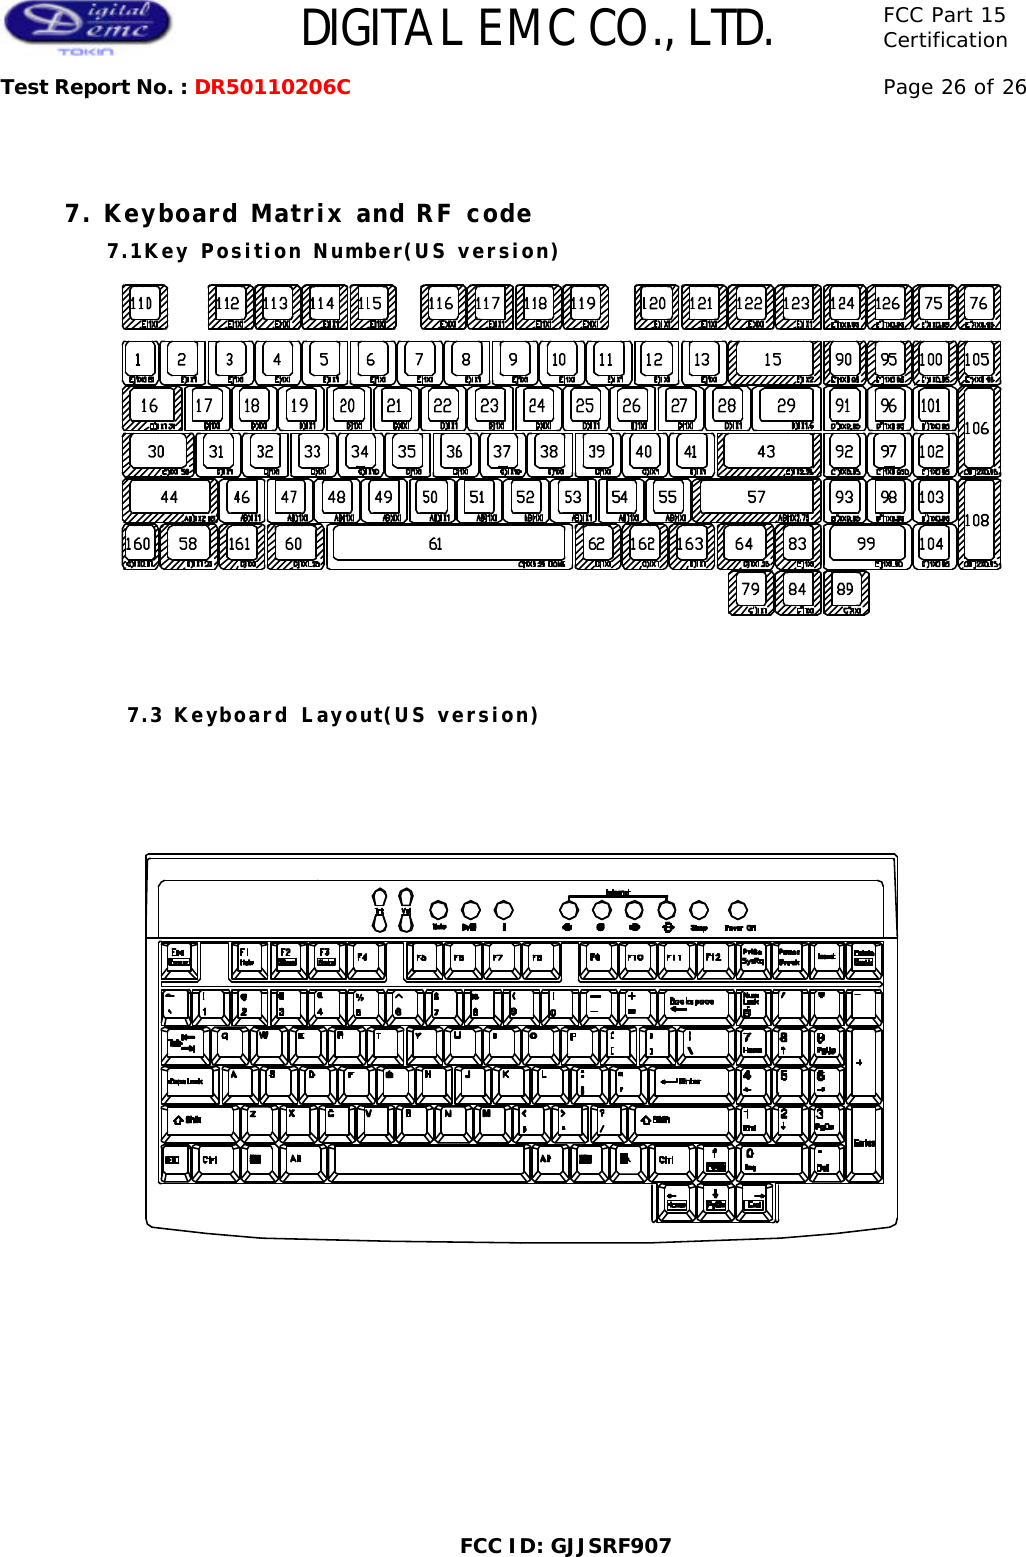  DIGITAL EMC CO., LTD. FCC Part 15 Certification Test Report No. : DR50110206C Page 26 of 26  FCC ID: GJJSRF907   7. Keyboard Matrix and RF code 7.1Key Position Number(US version)   7.3 Keyboard Layout(US version)   